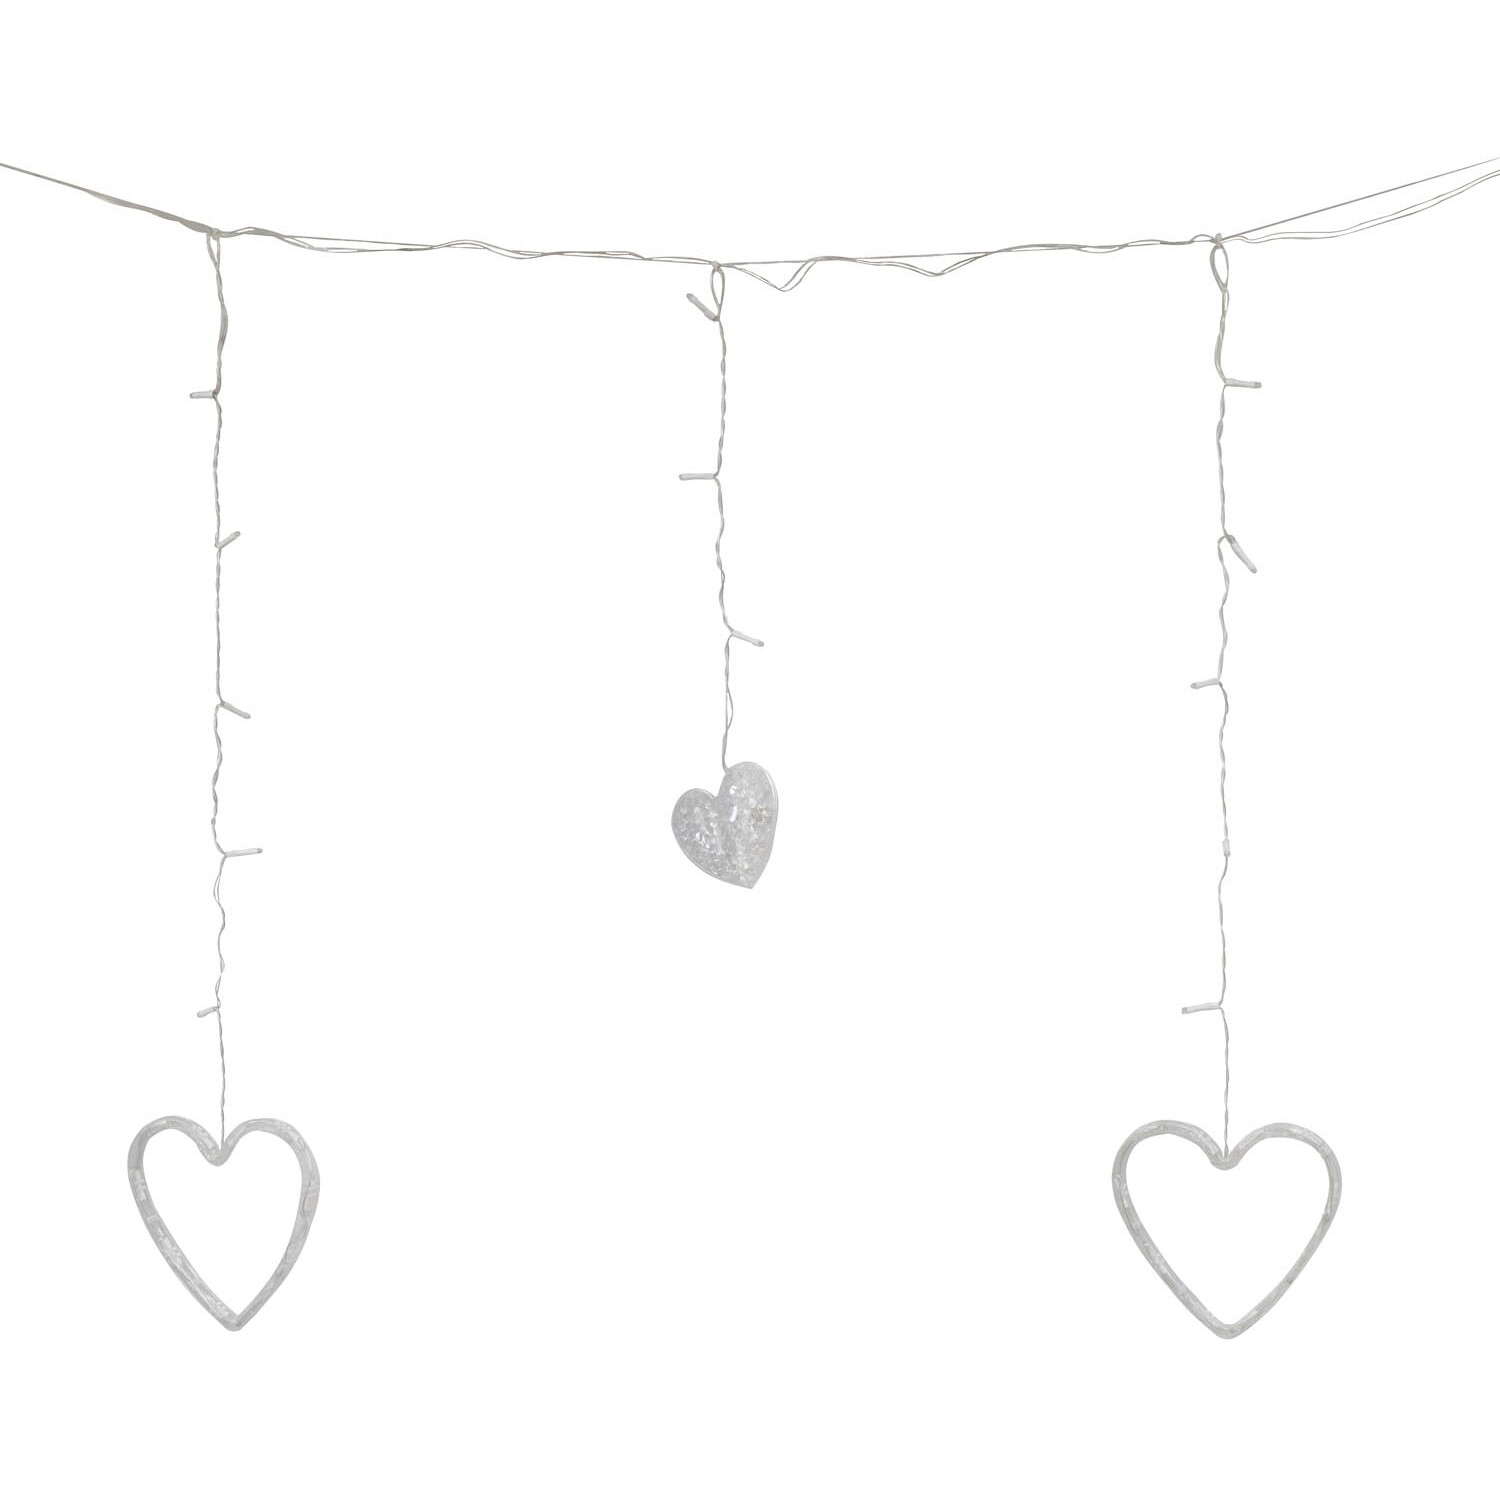 LED Heart Curtain String Light - Warm White Image 1